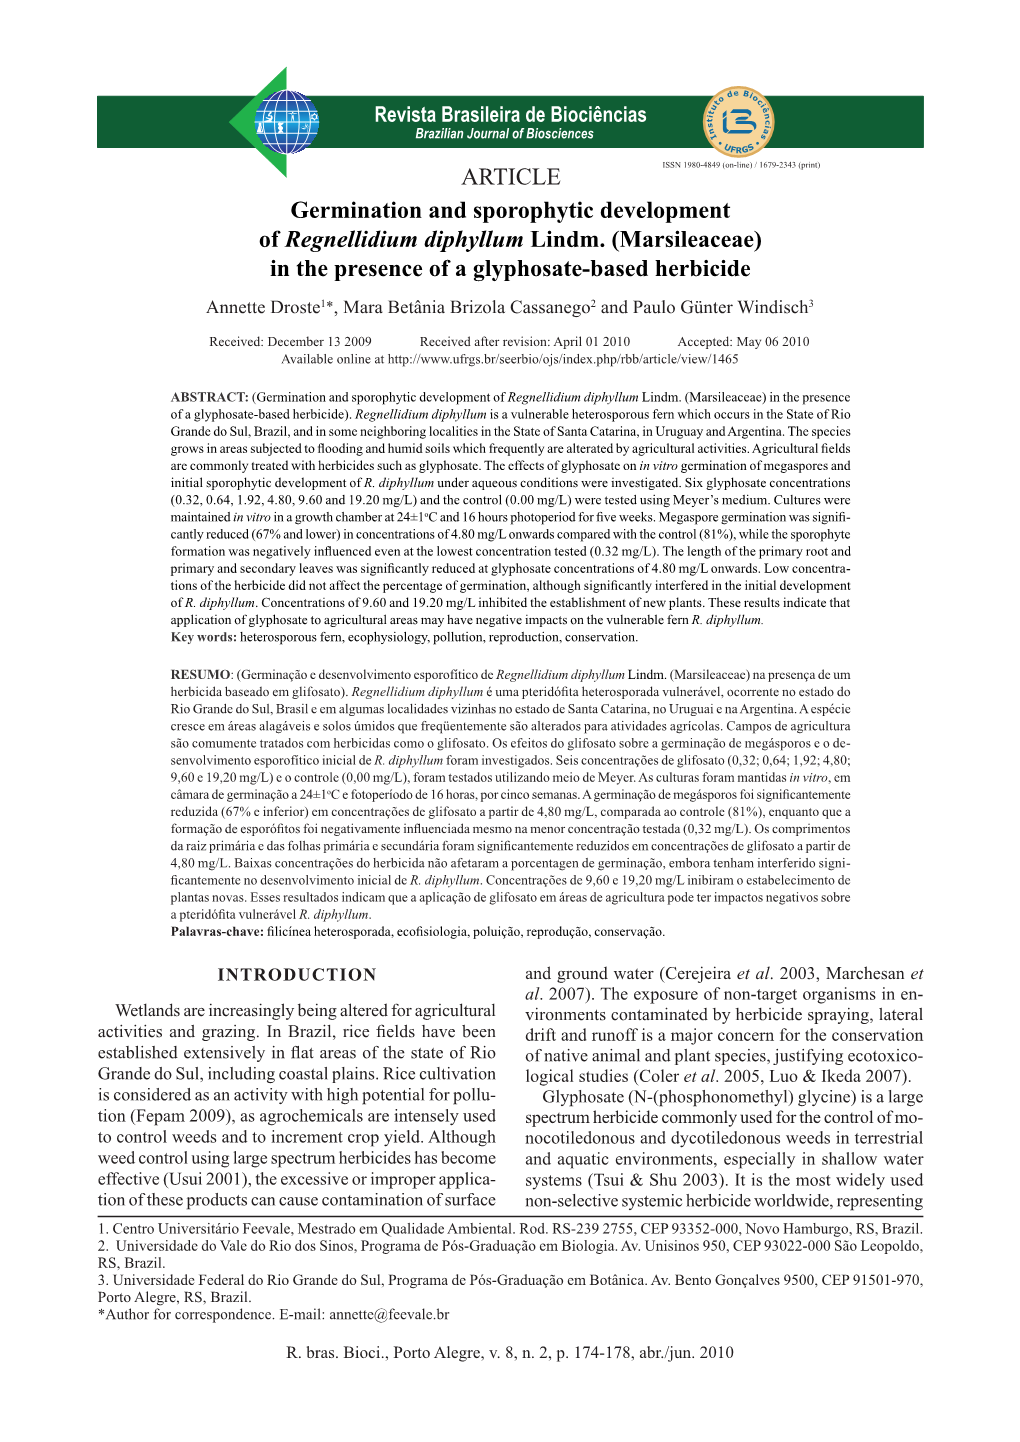 ARTICLE Germination and Sporophytic Development of Regnellidium Diphyllum Lindm